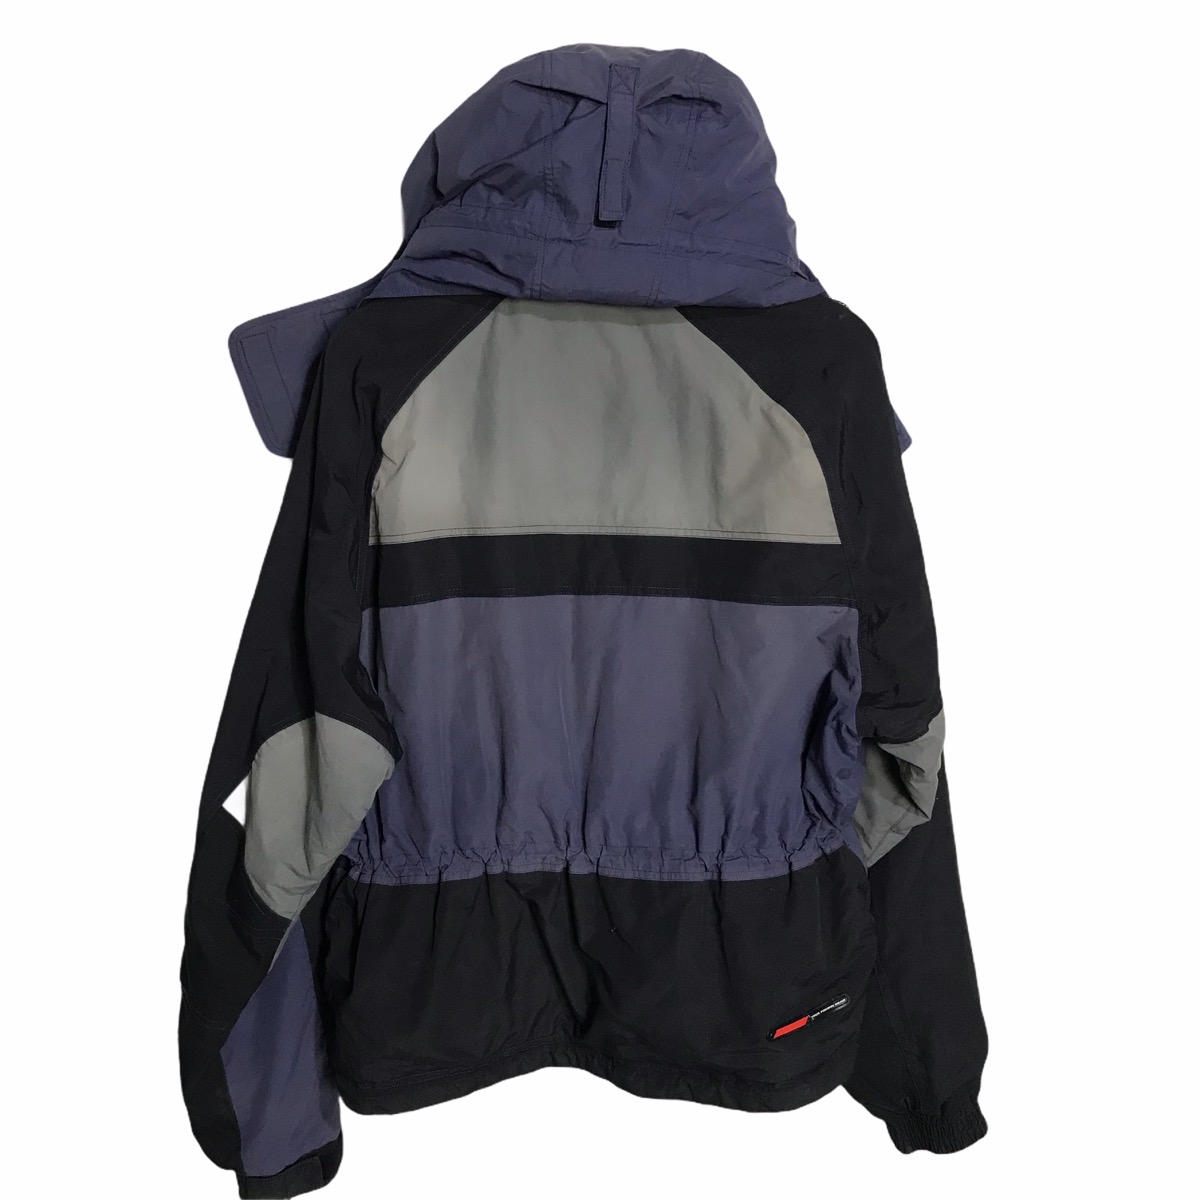 Other Designers Sports Specialties - Shimano nexus hyper fishing gear jacket, ststore